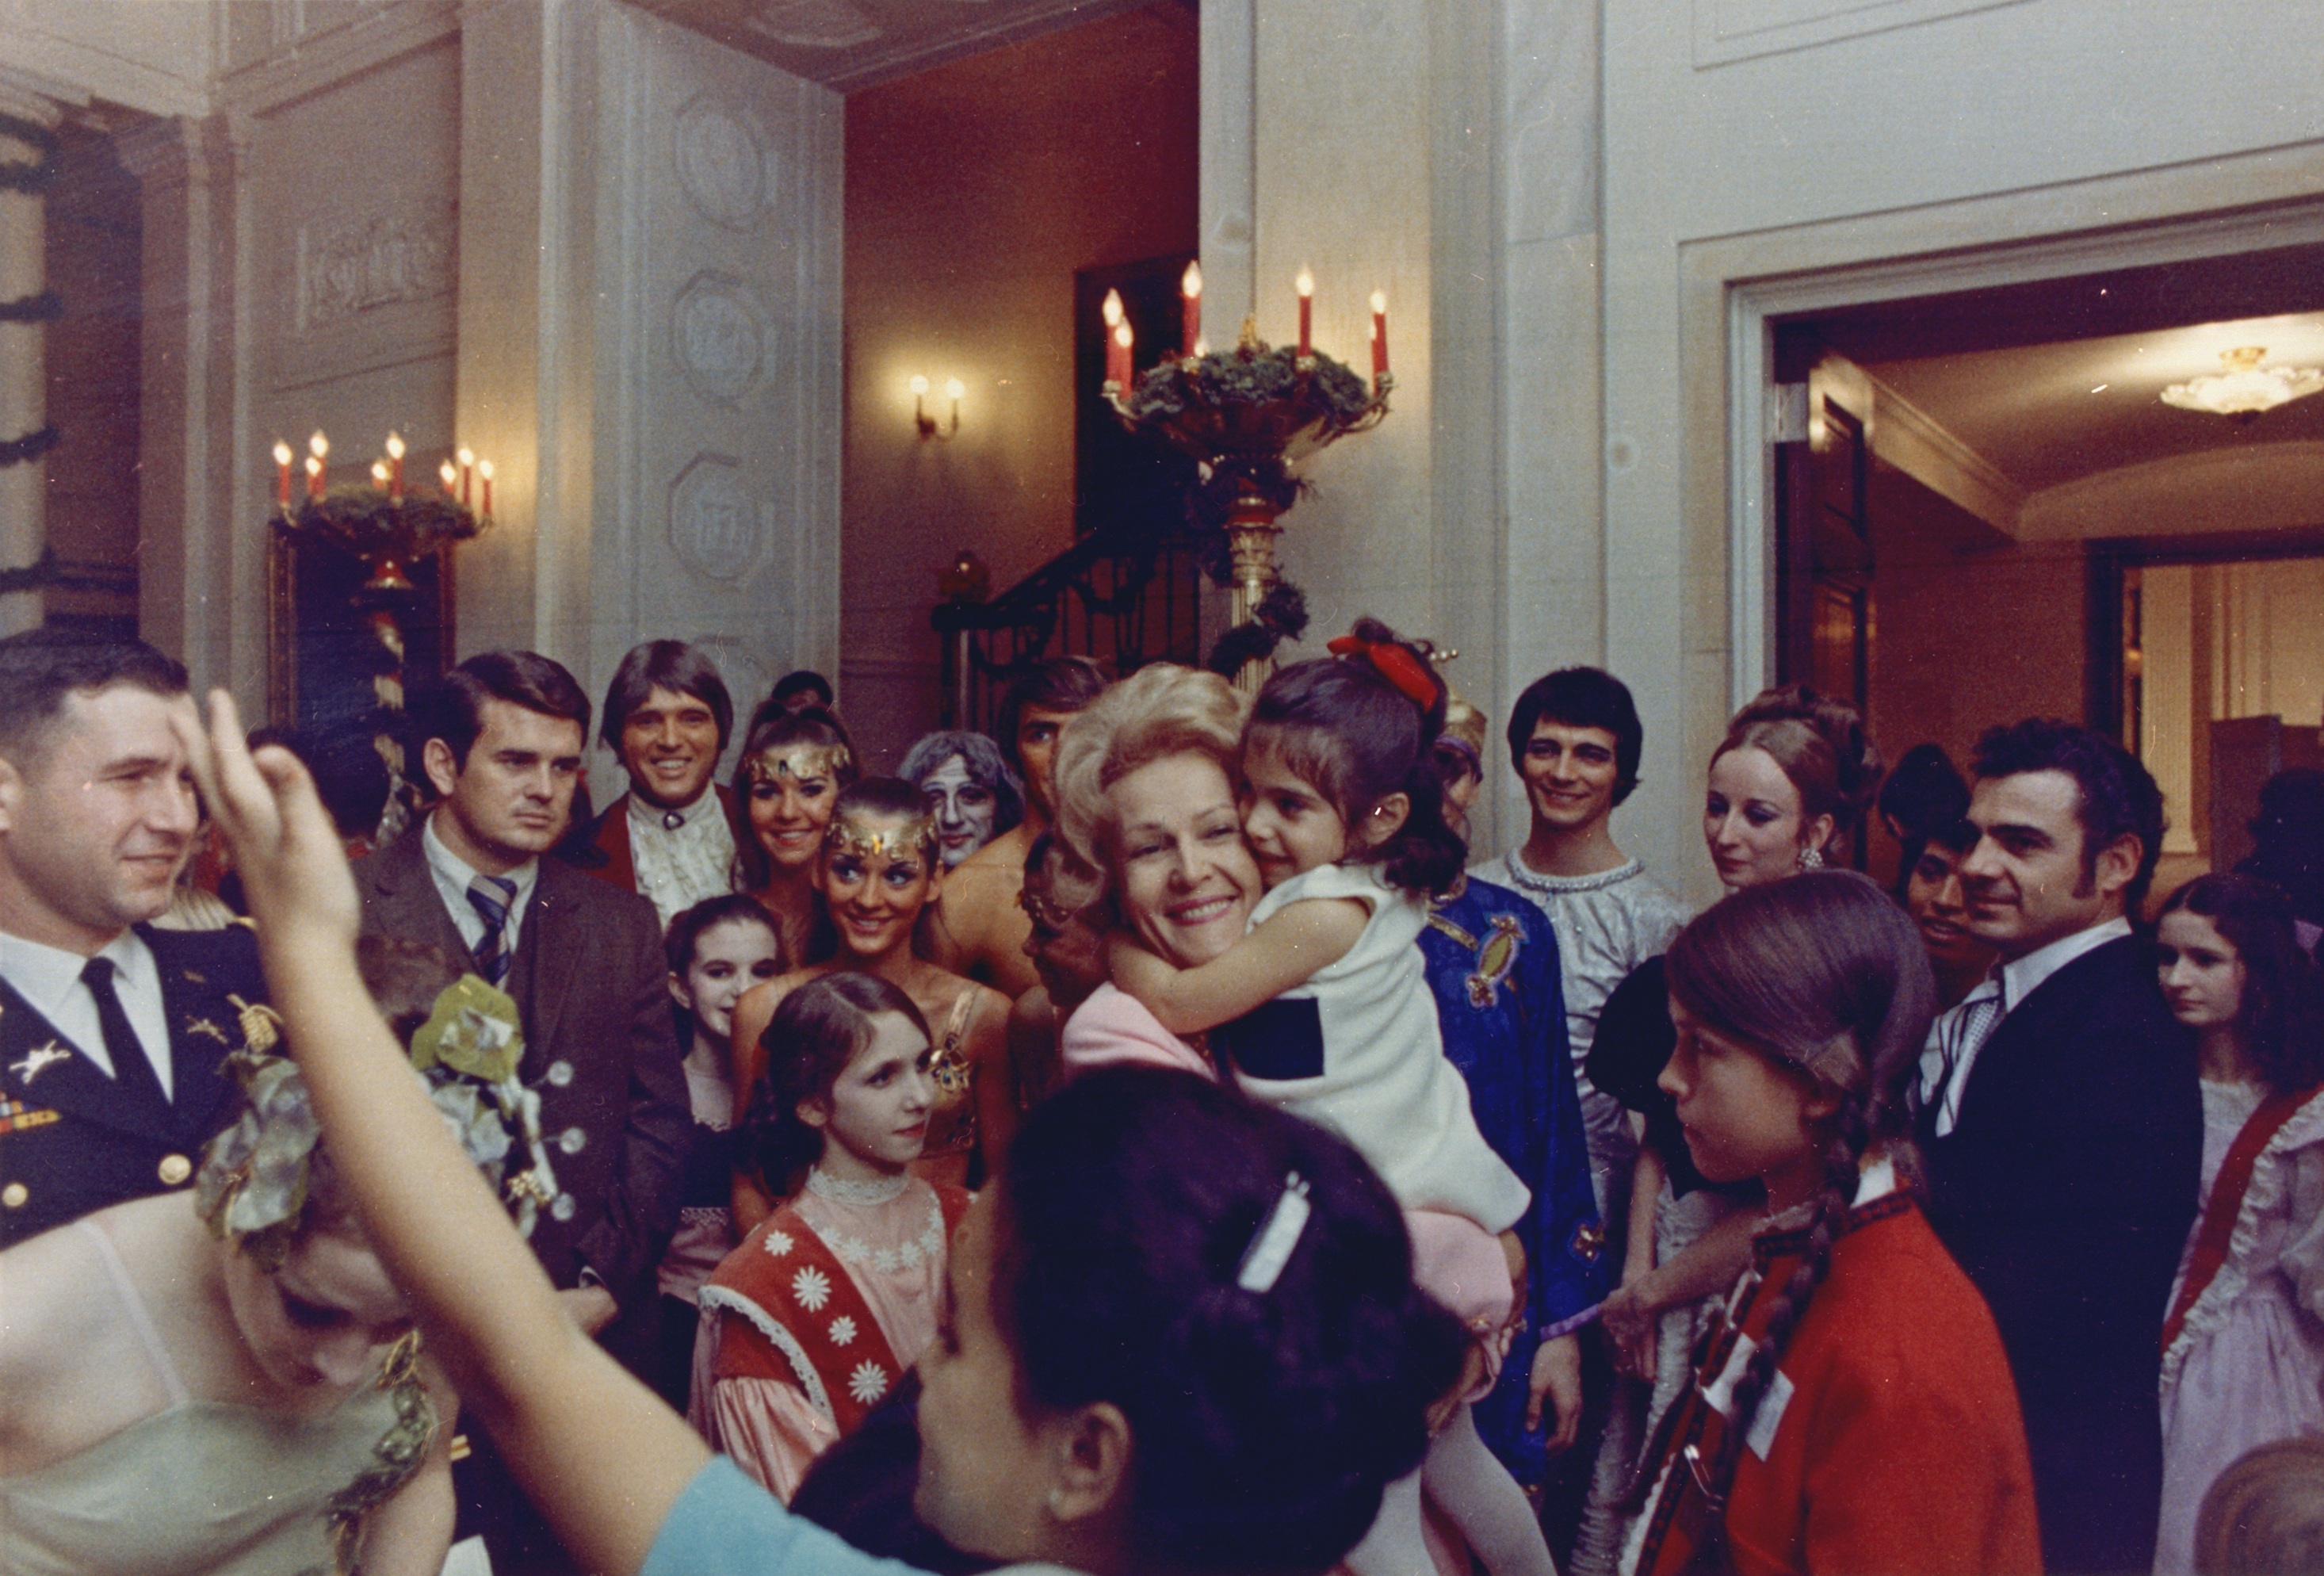 Pat Nixon greets White House visitors 1969